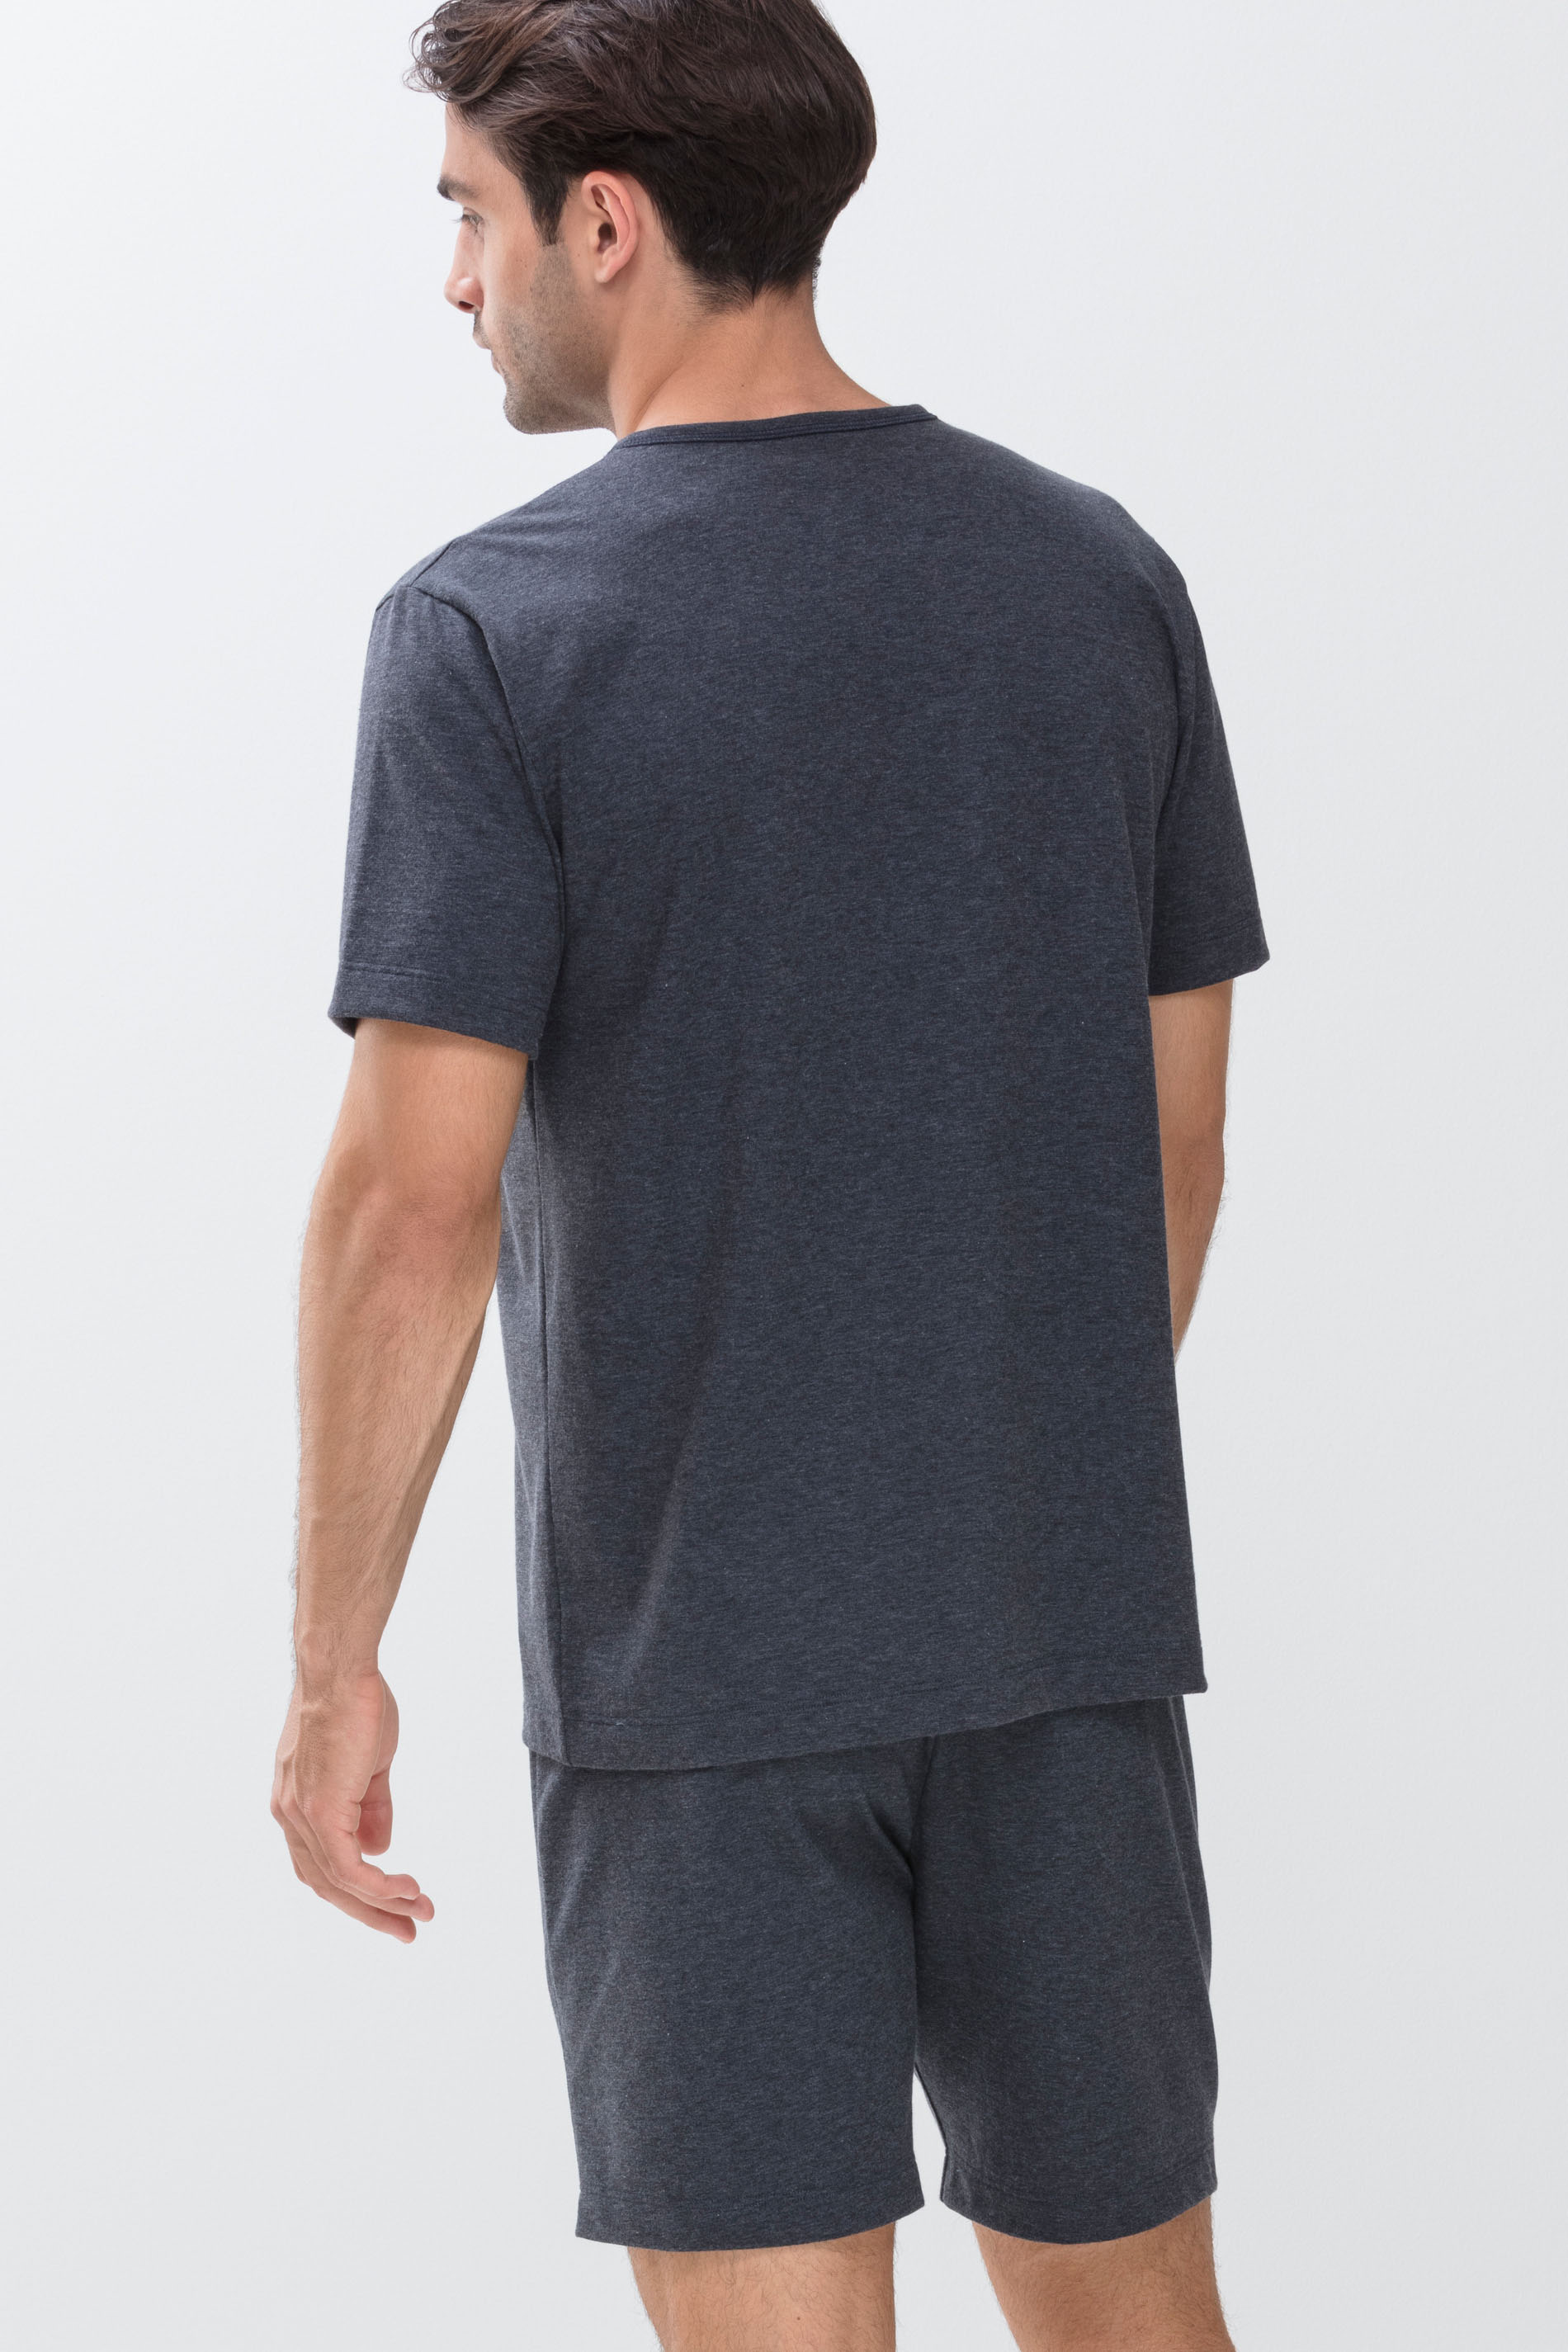 T-Shirt Smoke Melange Serie Zzzleepwear Rückansicht | mey®